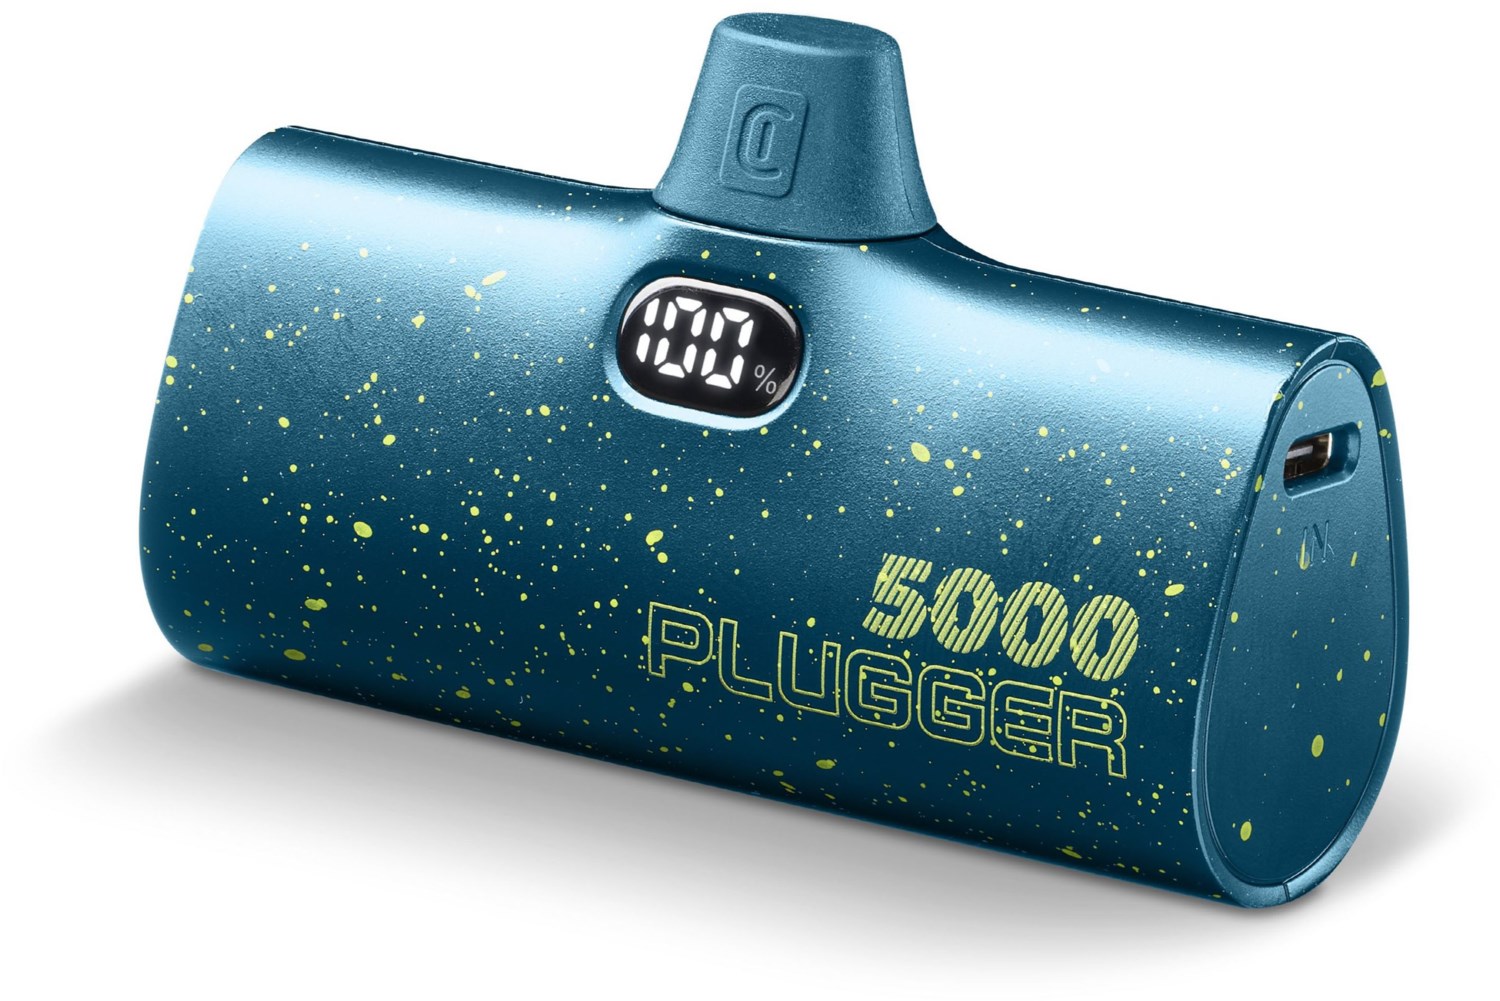 Plugger 5000 Powerbank blau